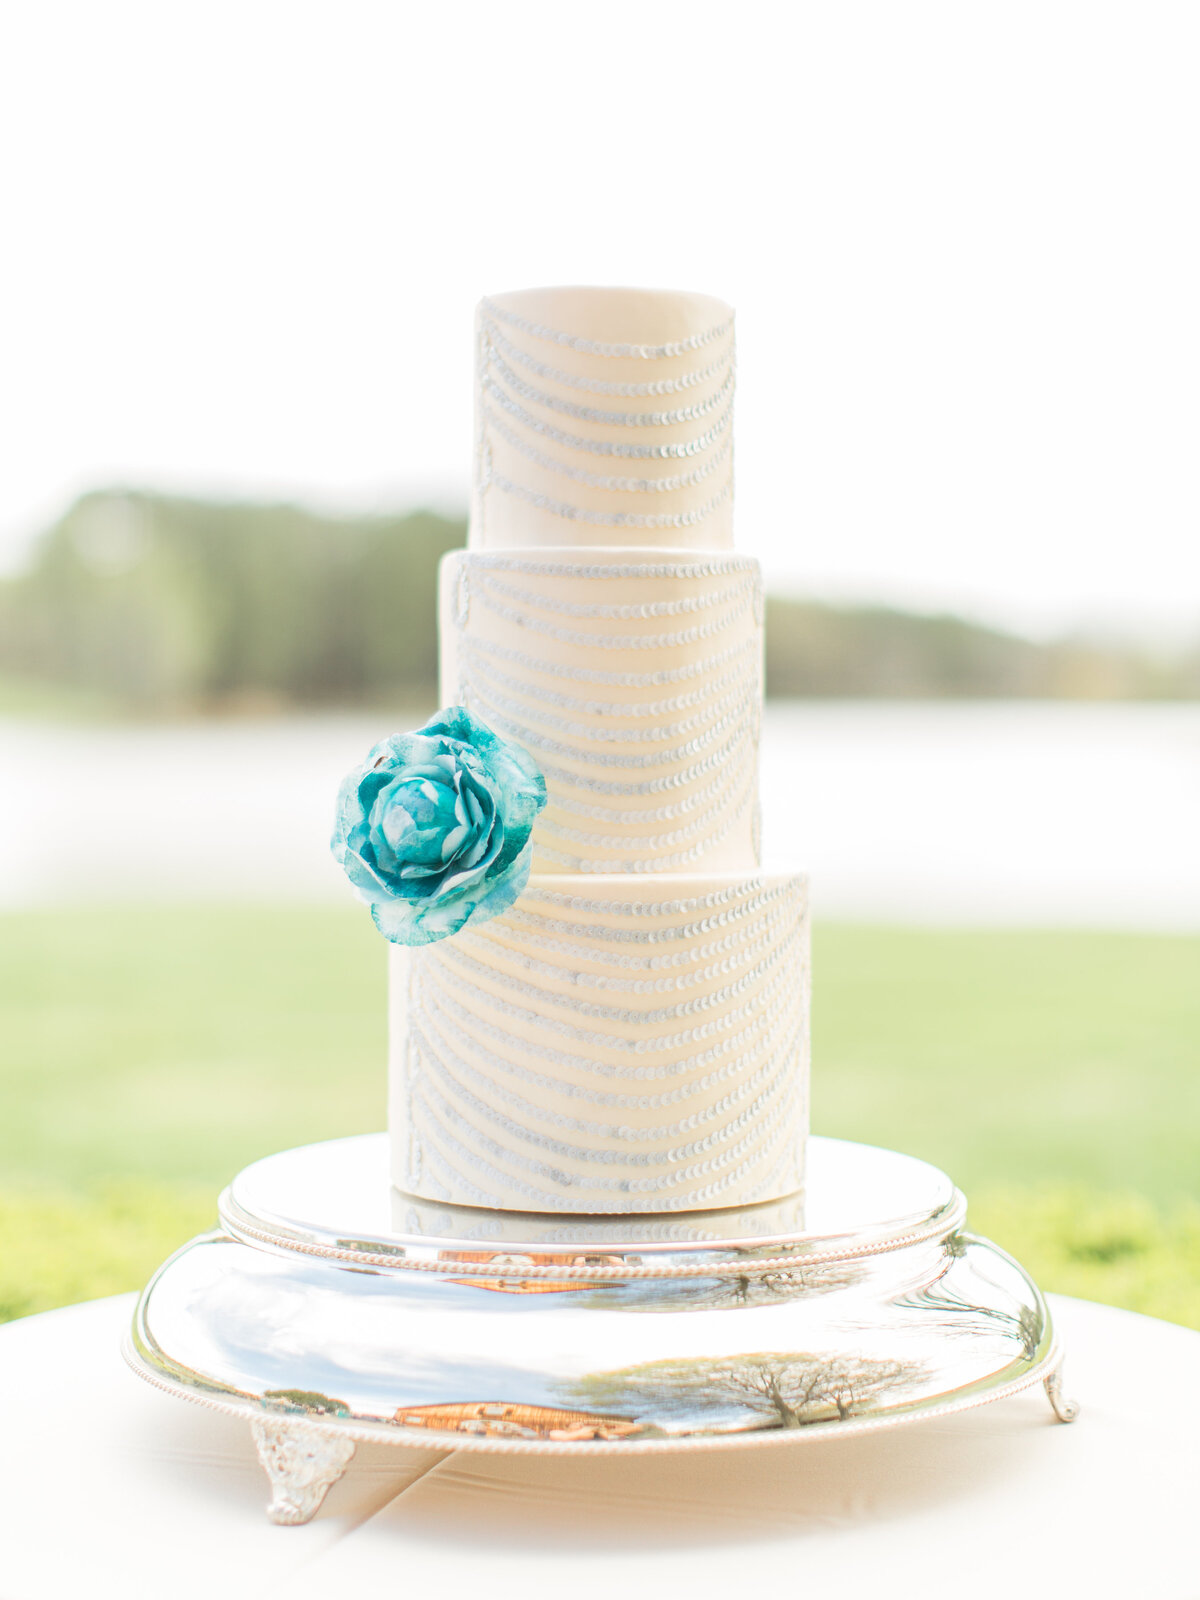 Rachel-May-Photography-41216- Trump Winery wedding dress inspired wedding cake - charlottesville virginia wedding cakes